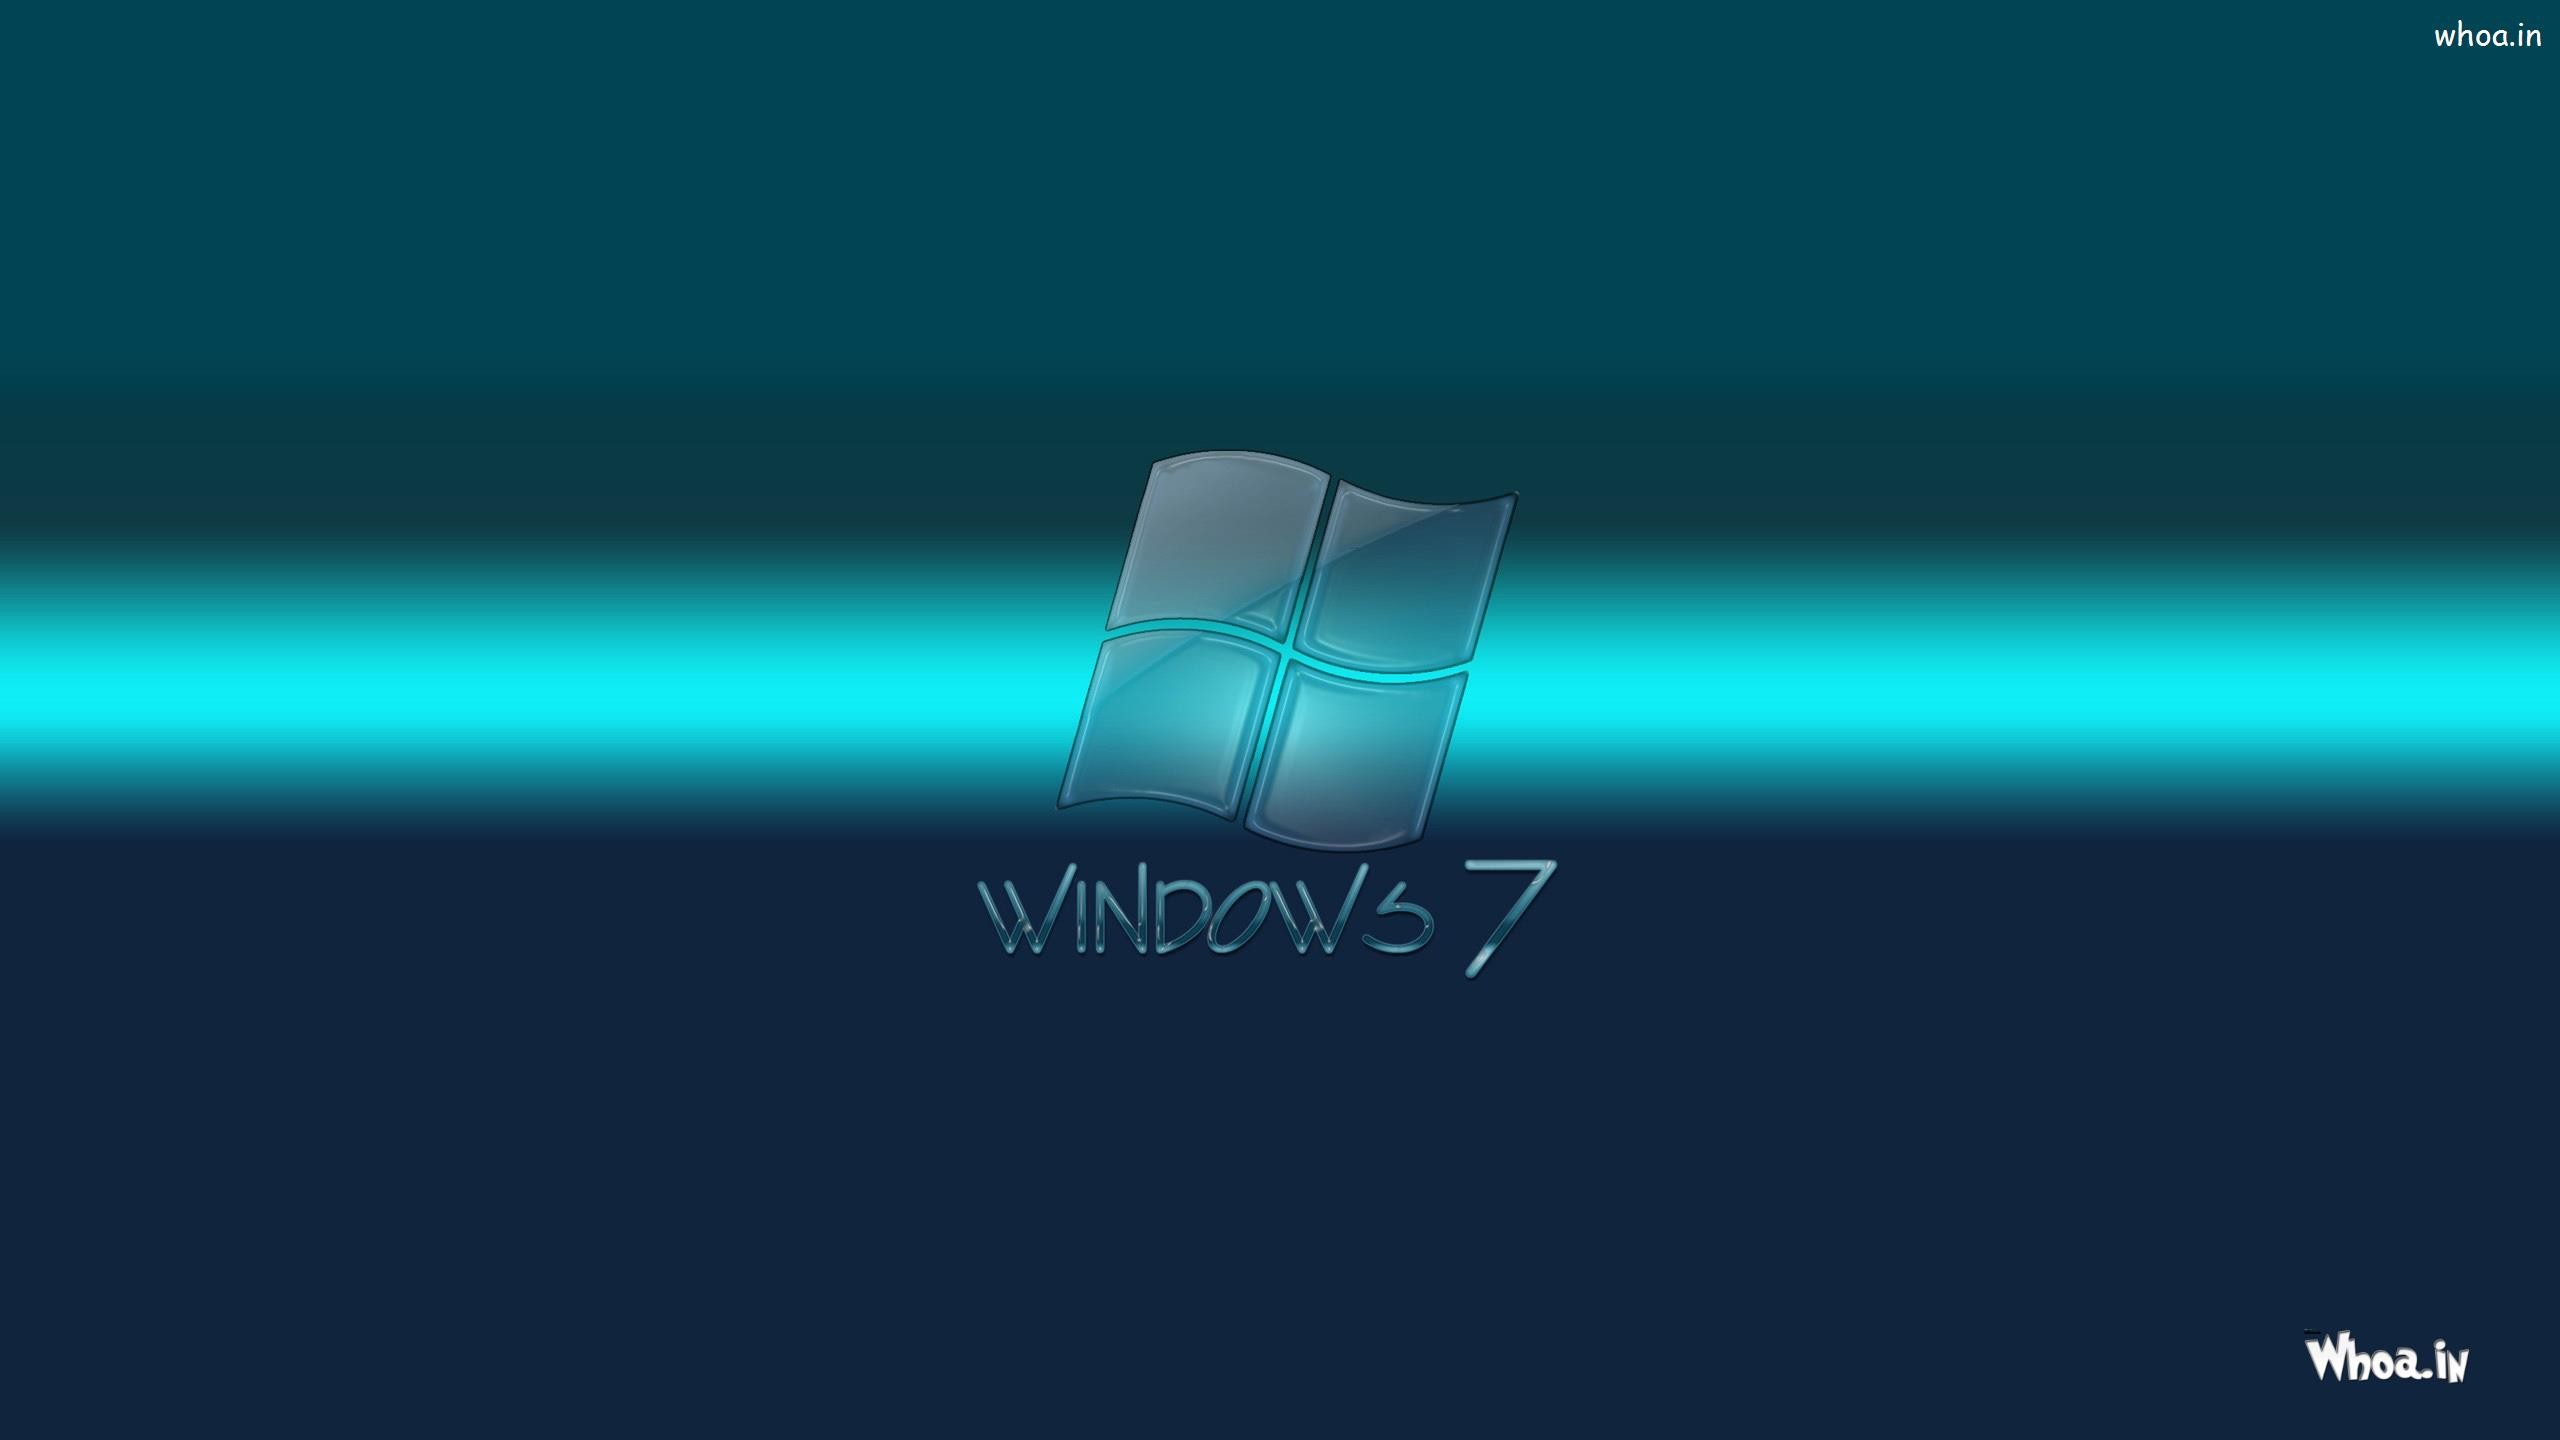 Free download Desktop Background Windows 7 62 images [2560x1440] for